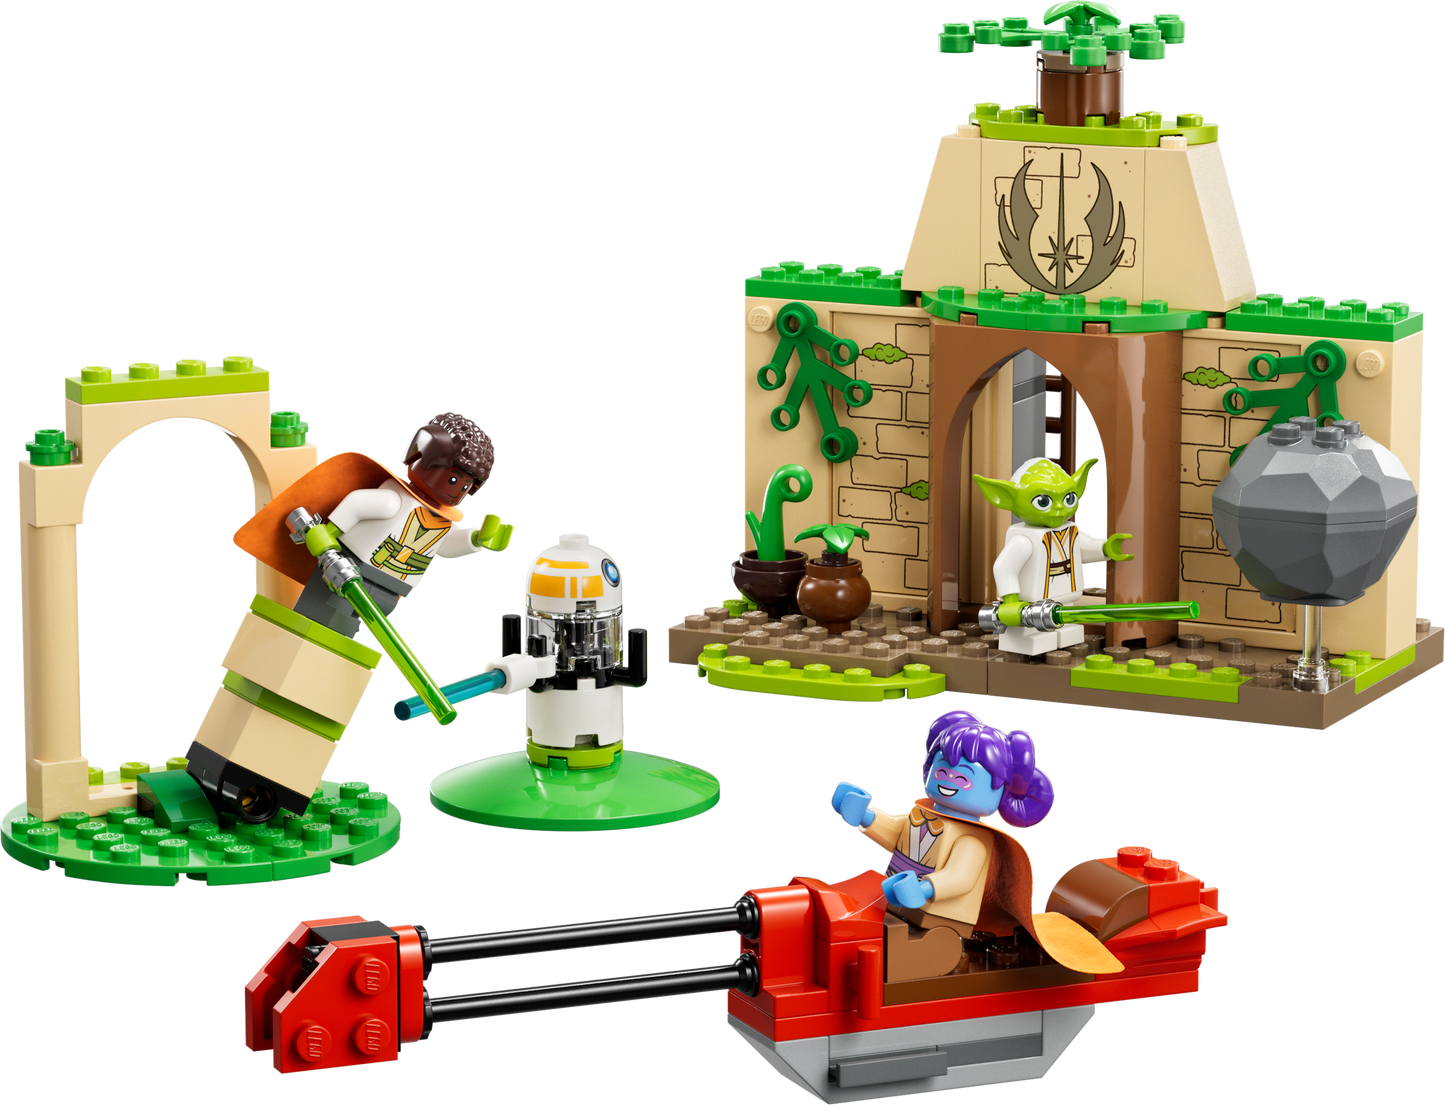 LEGO® Star Wars 75358 Tenoo Jedi Temple™